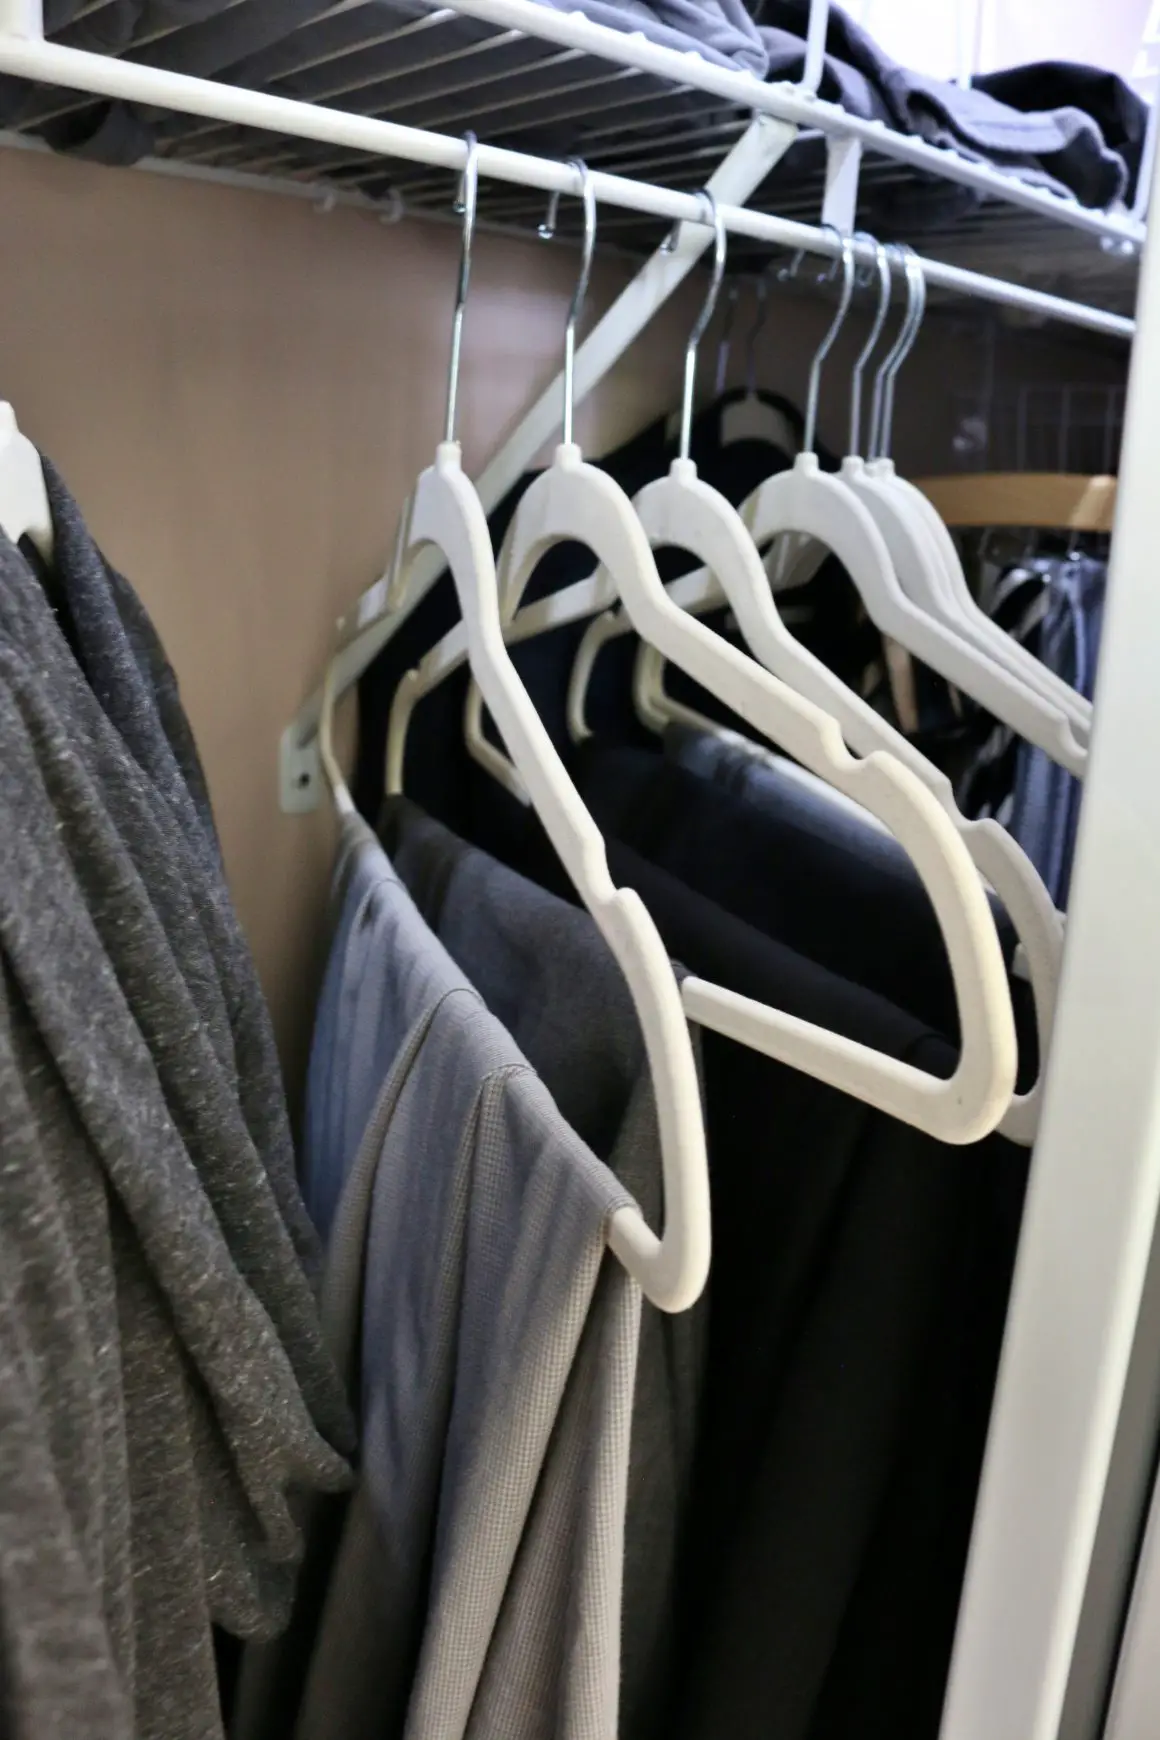 Velvet Hangers from Amazon
small closet organization
